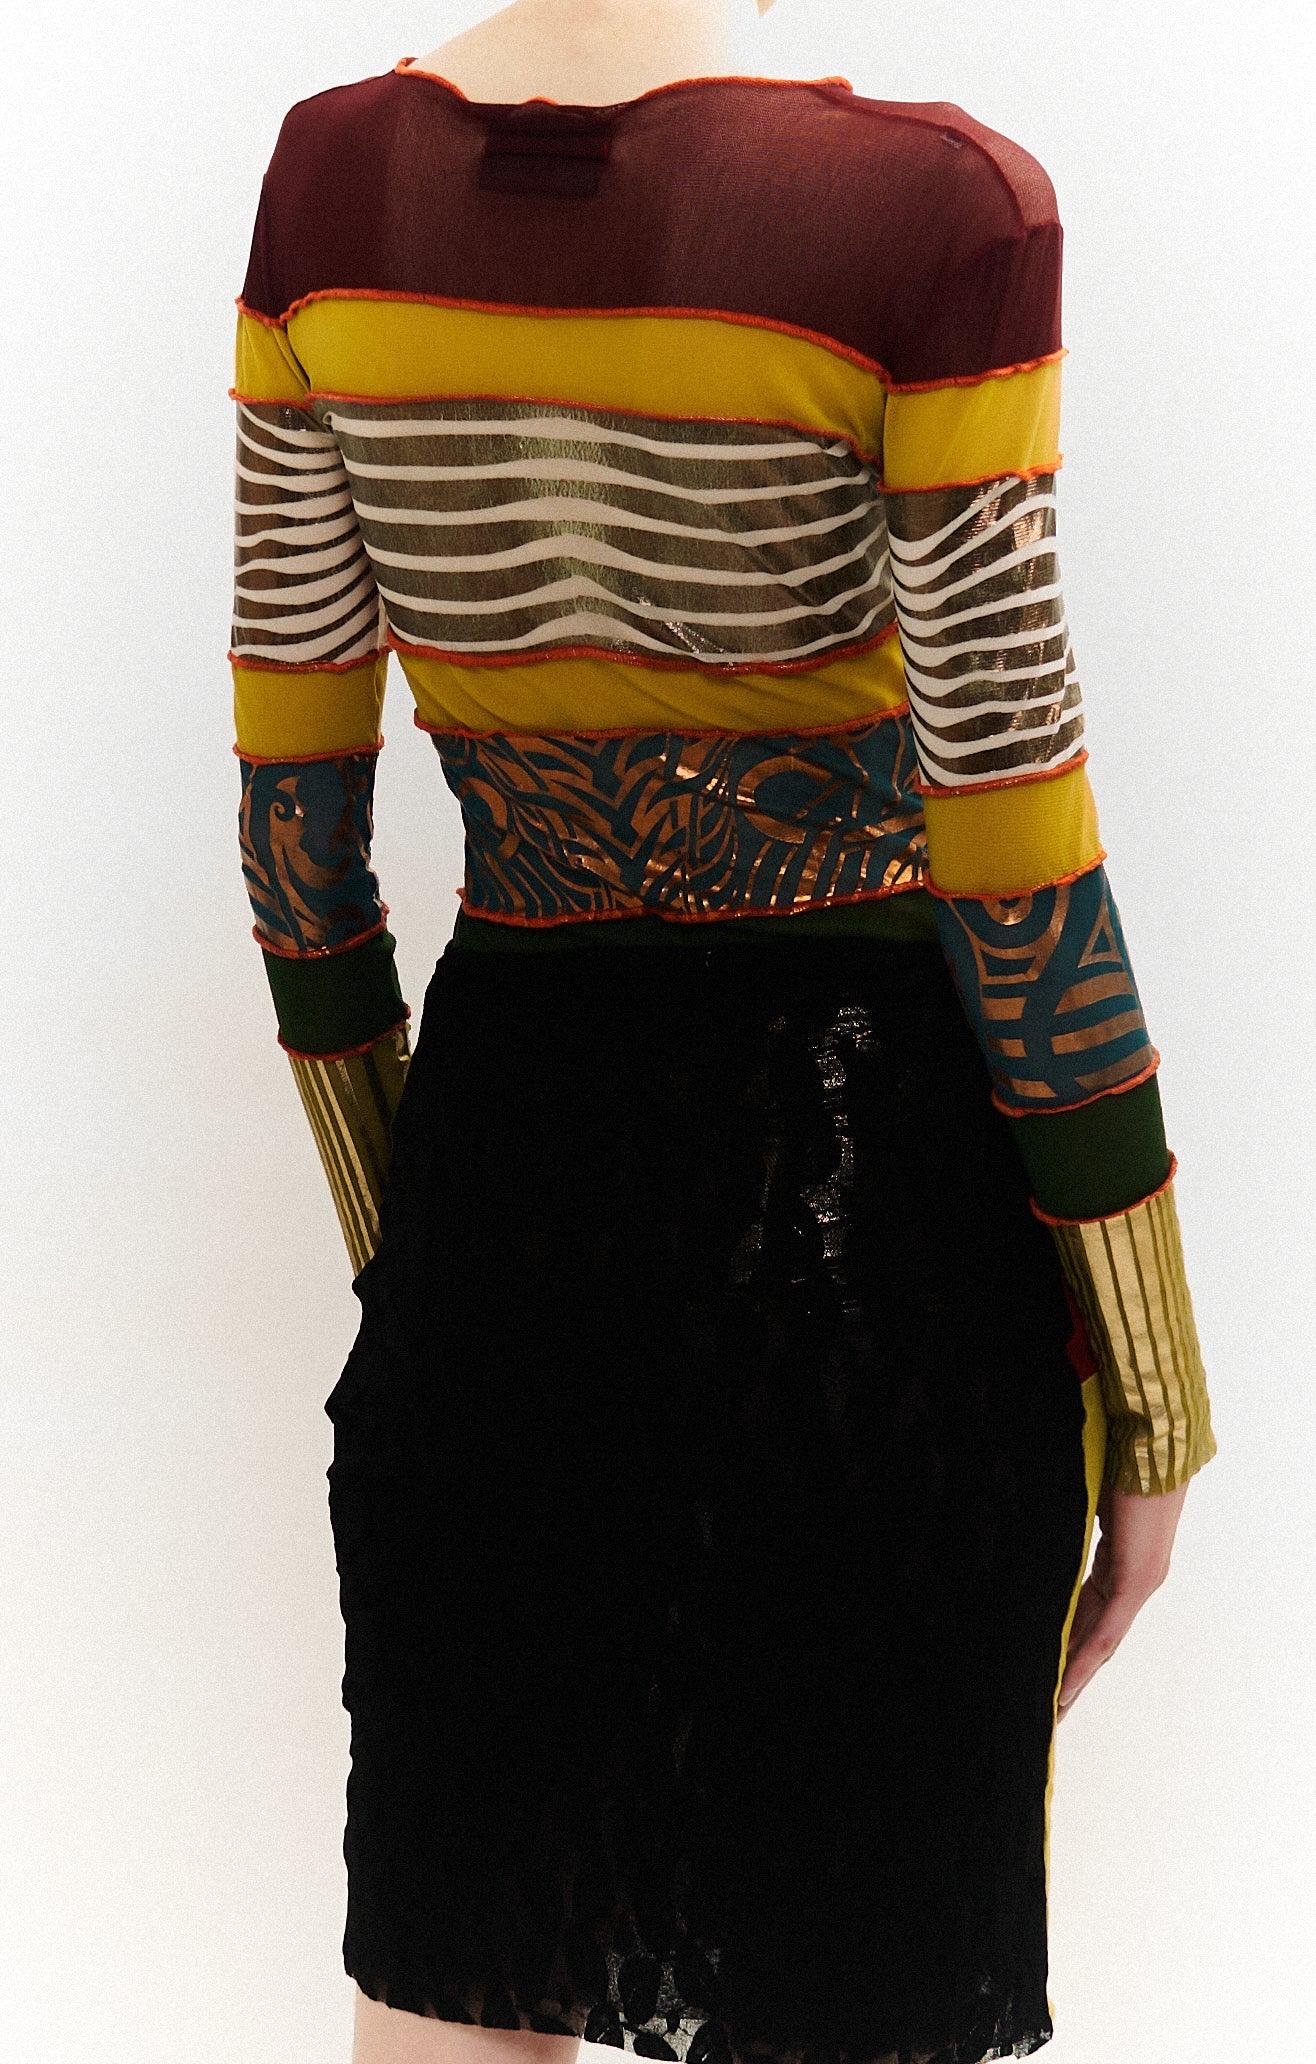 Jean Paul Gaultier S/S 1996 Cyberbaba Mesh Foil Print Top & Skirt Ensemble For Sale 1